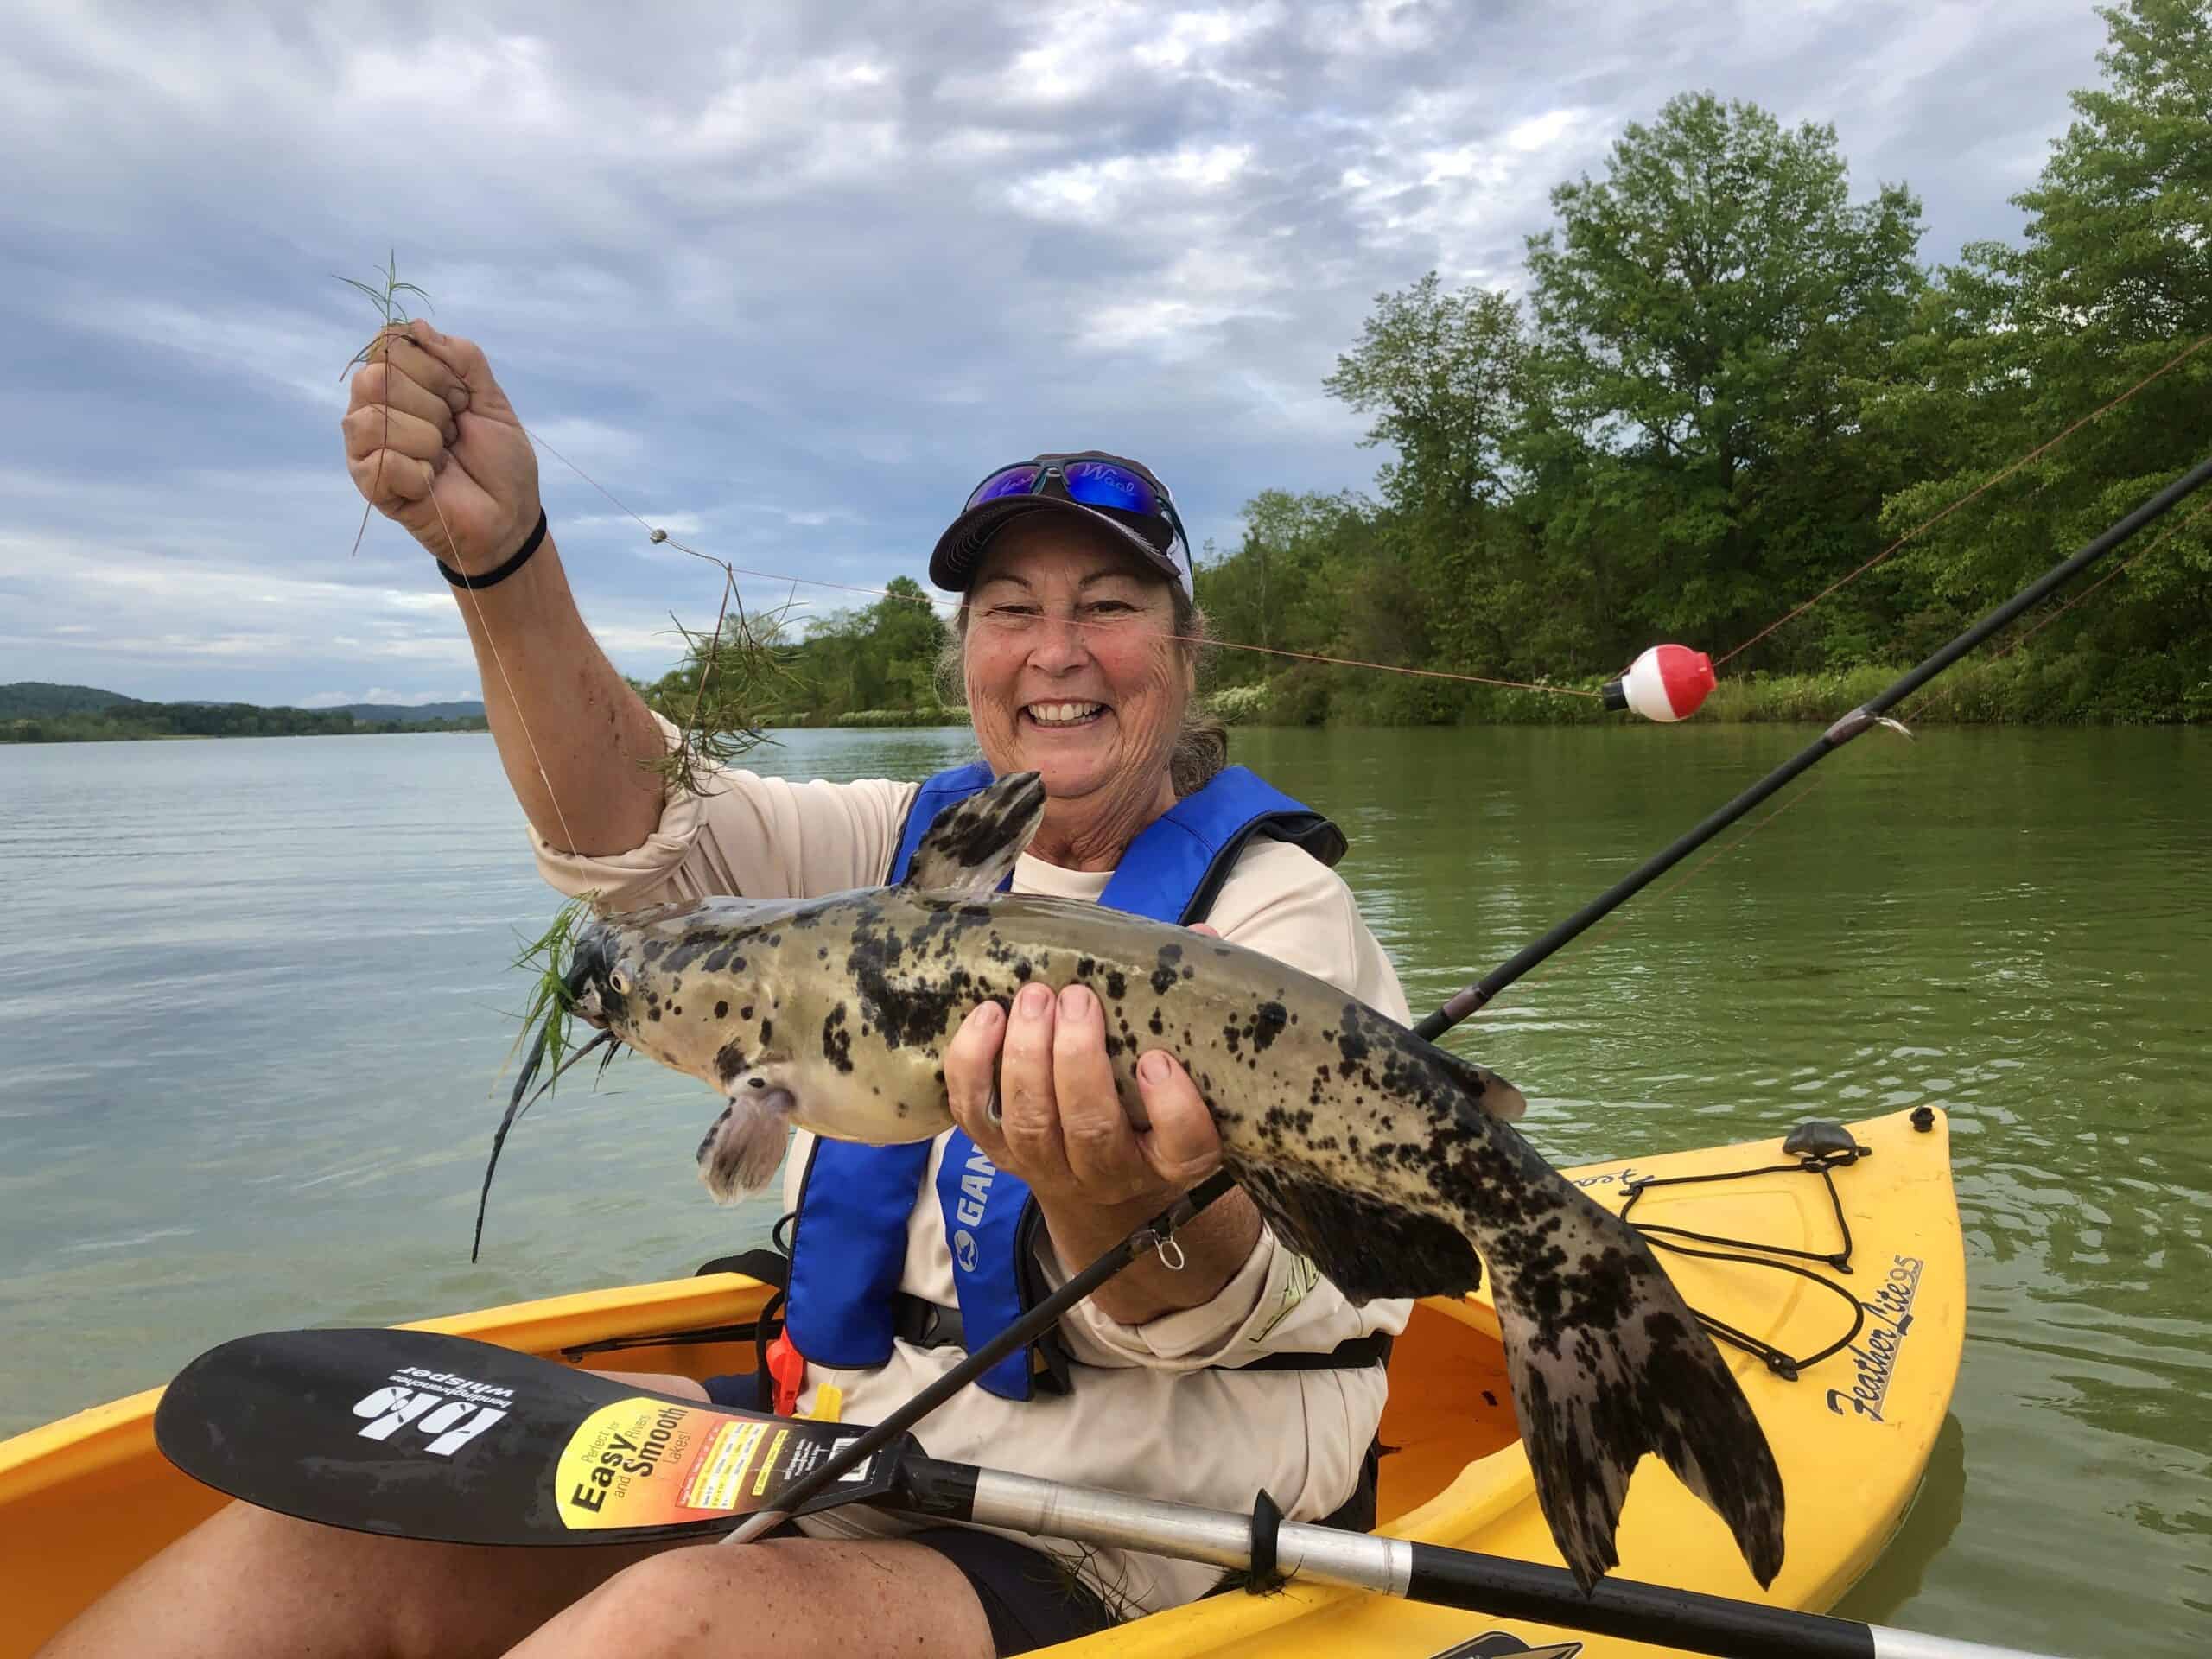 Kayaks + catfish = Great June fishing